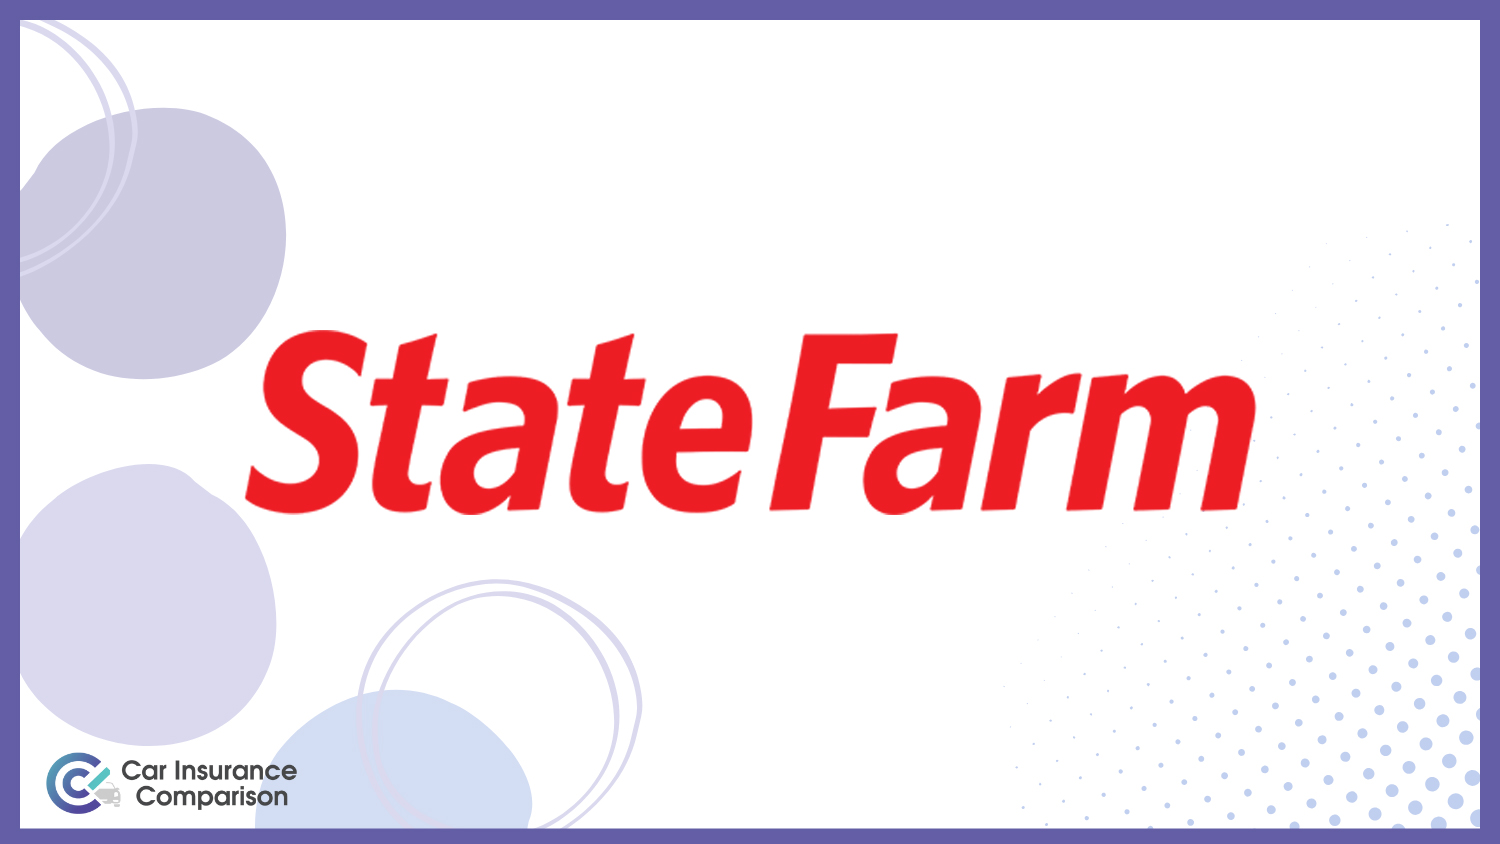 State farm: Best Car Insurance Companies